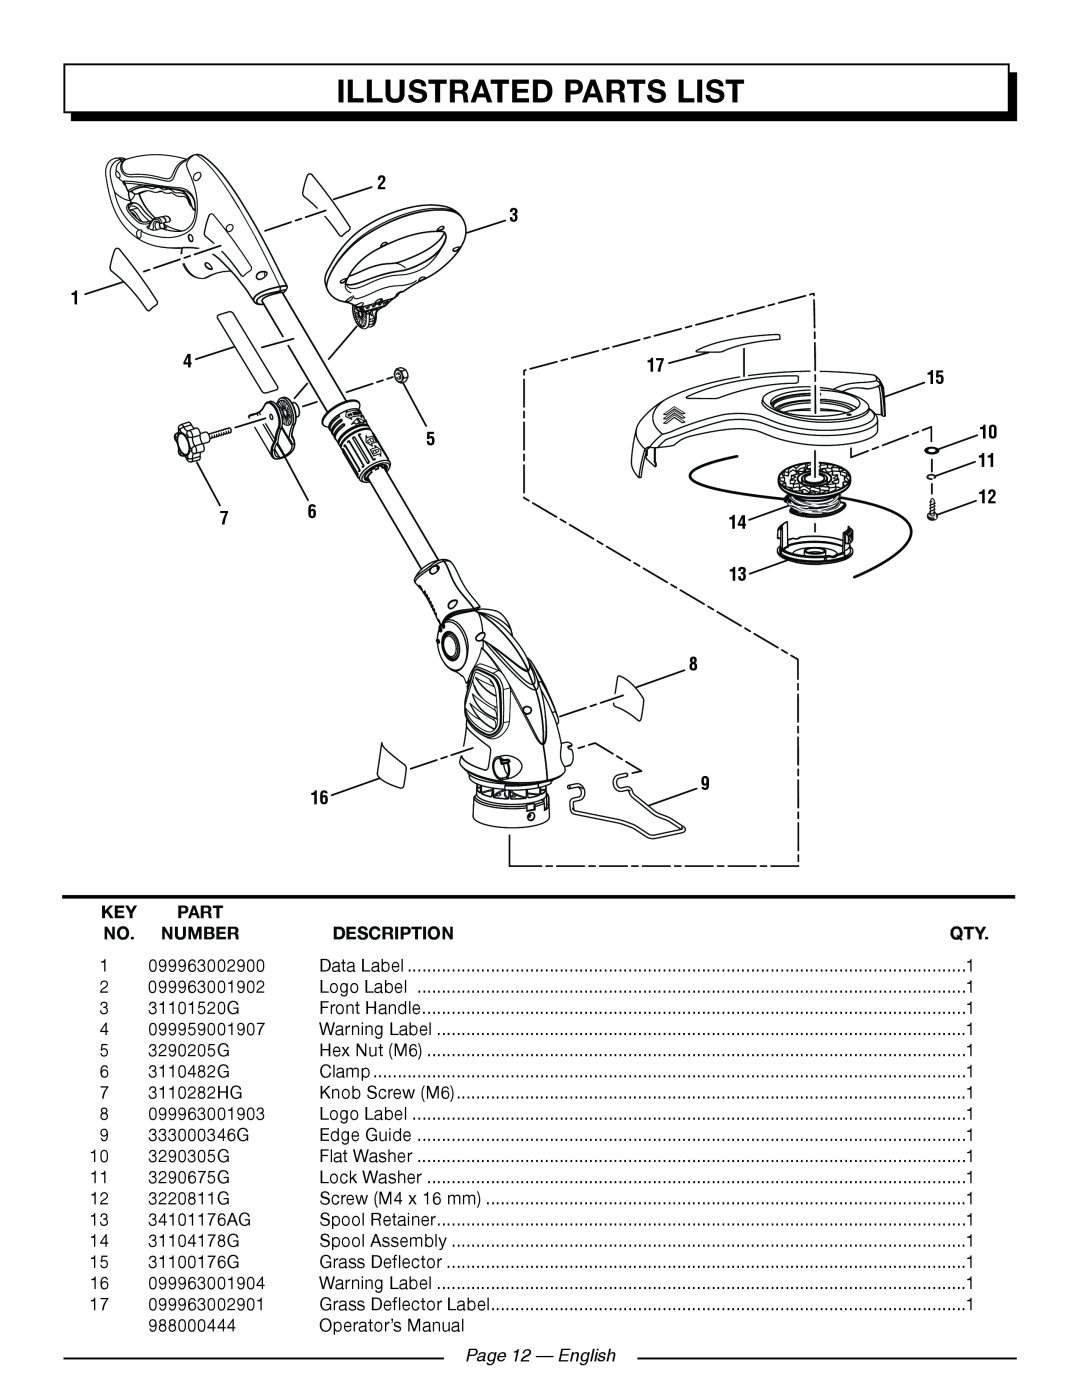 Homelite UT41121 manuel dutilisation Illustrated Parts List, Page 12 - English 